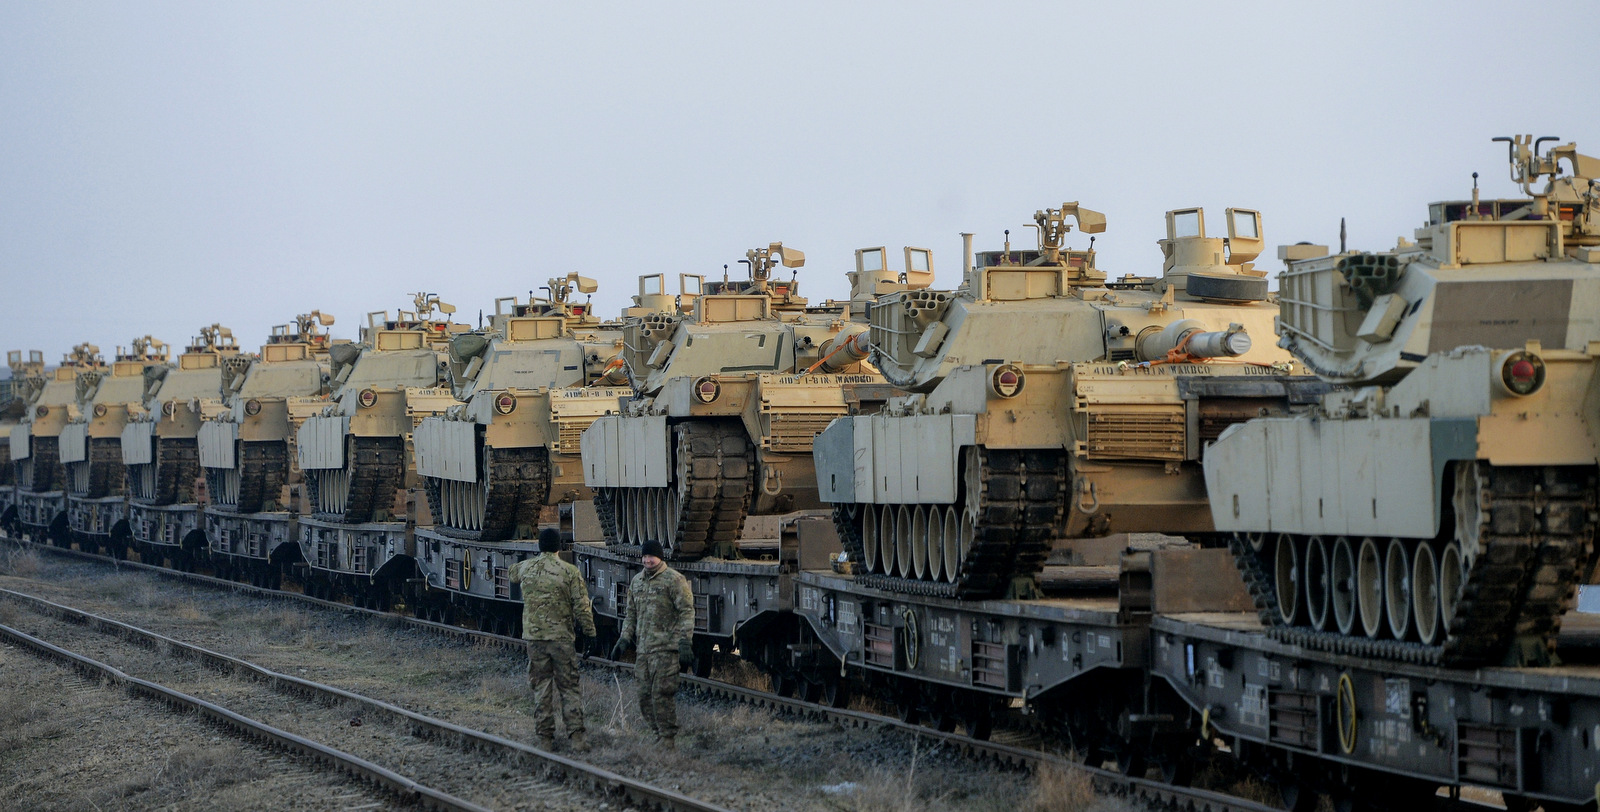 Militares del 1er Batallón "Fighting Eagles", 8º Regimiento de Infantería, caminan en tanques que llegaron en tren a la base estadounidense en Mihail Kogalniceanu, este de Rumania, el martes 14 de febrero de 2017. (AP / Andreea Alexandru)